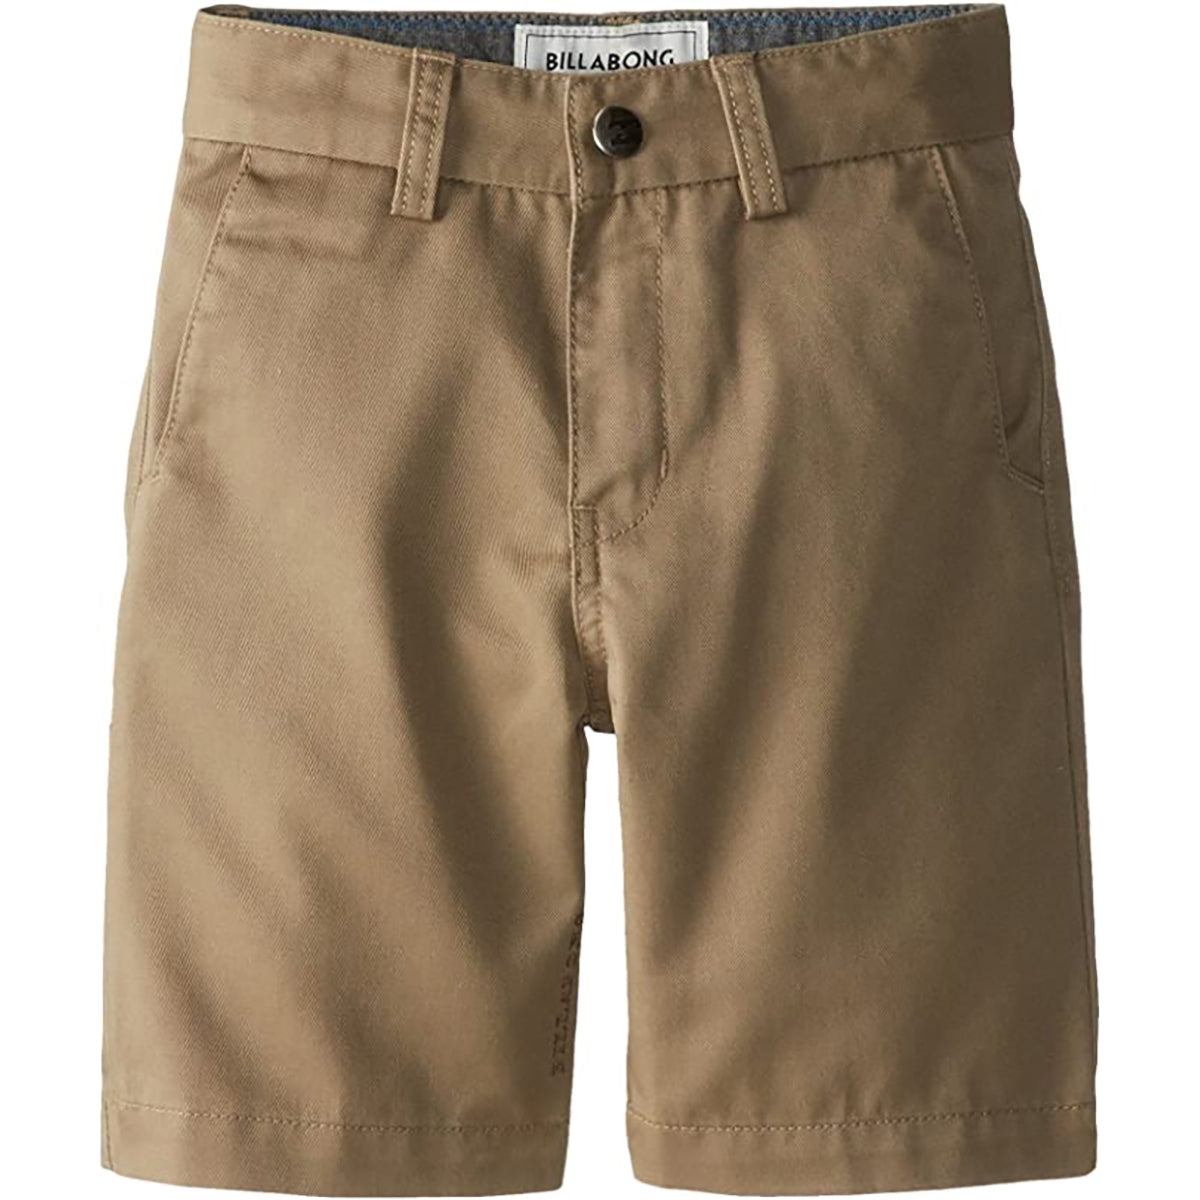 Billabong Carter Youth Boys Walkshort Shorts-K207ACAR